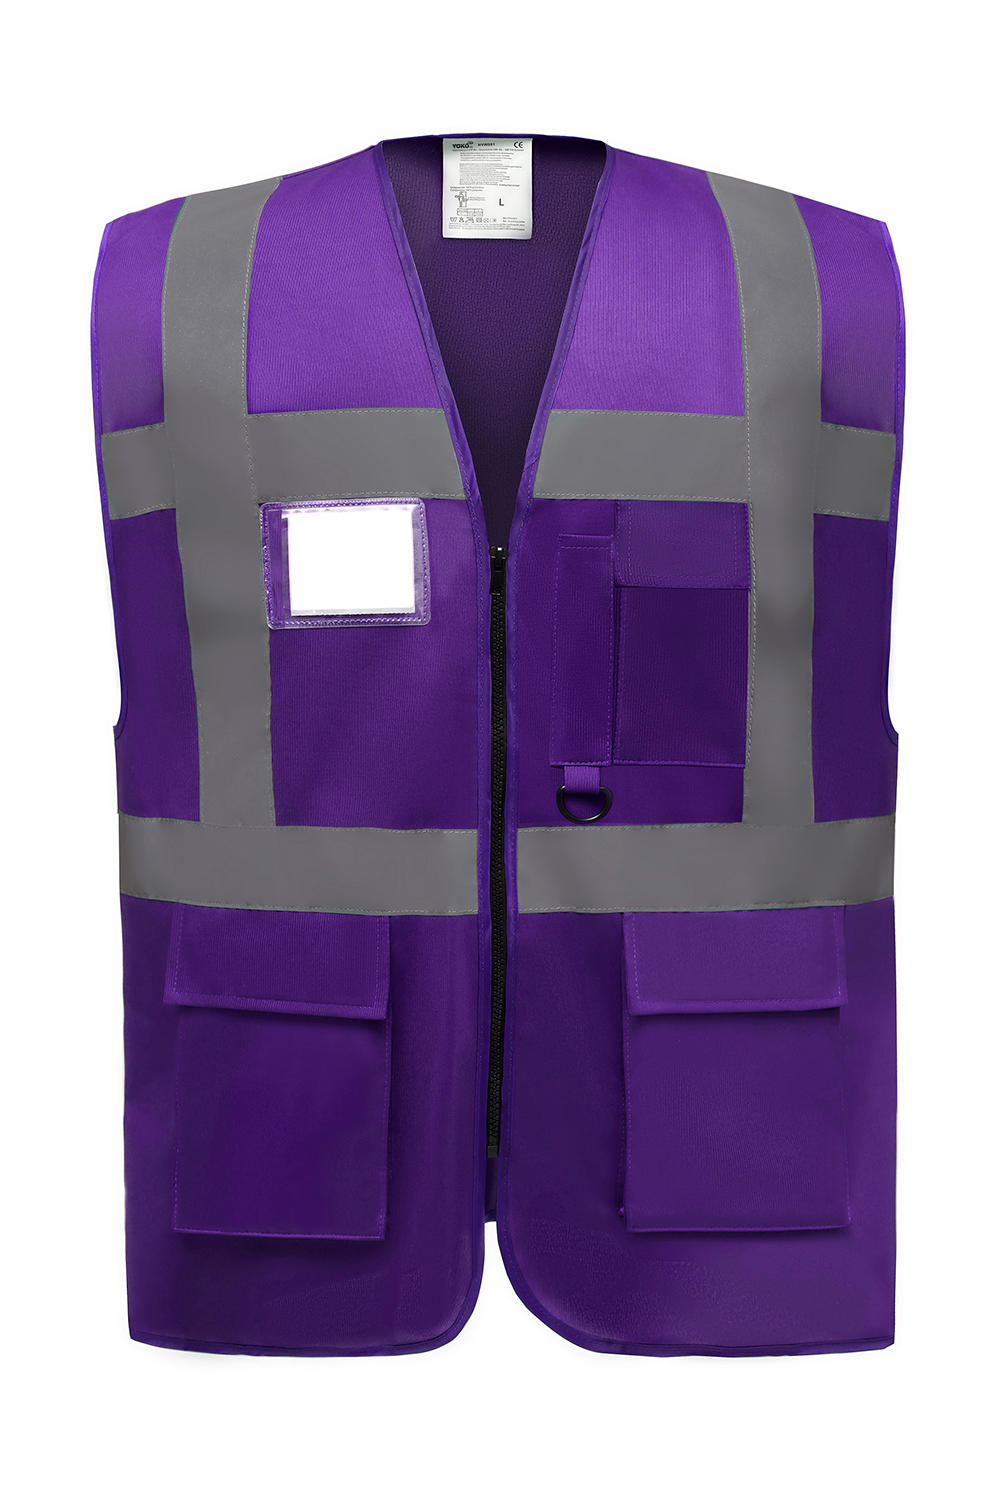  Fluo Executive Waistcoat in Farbe Purple